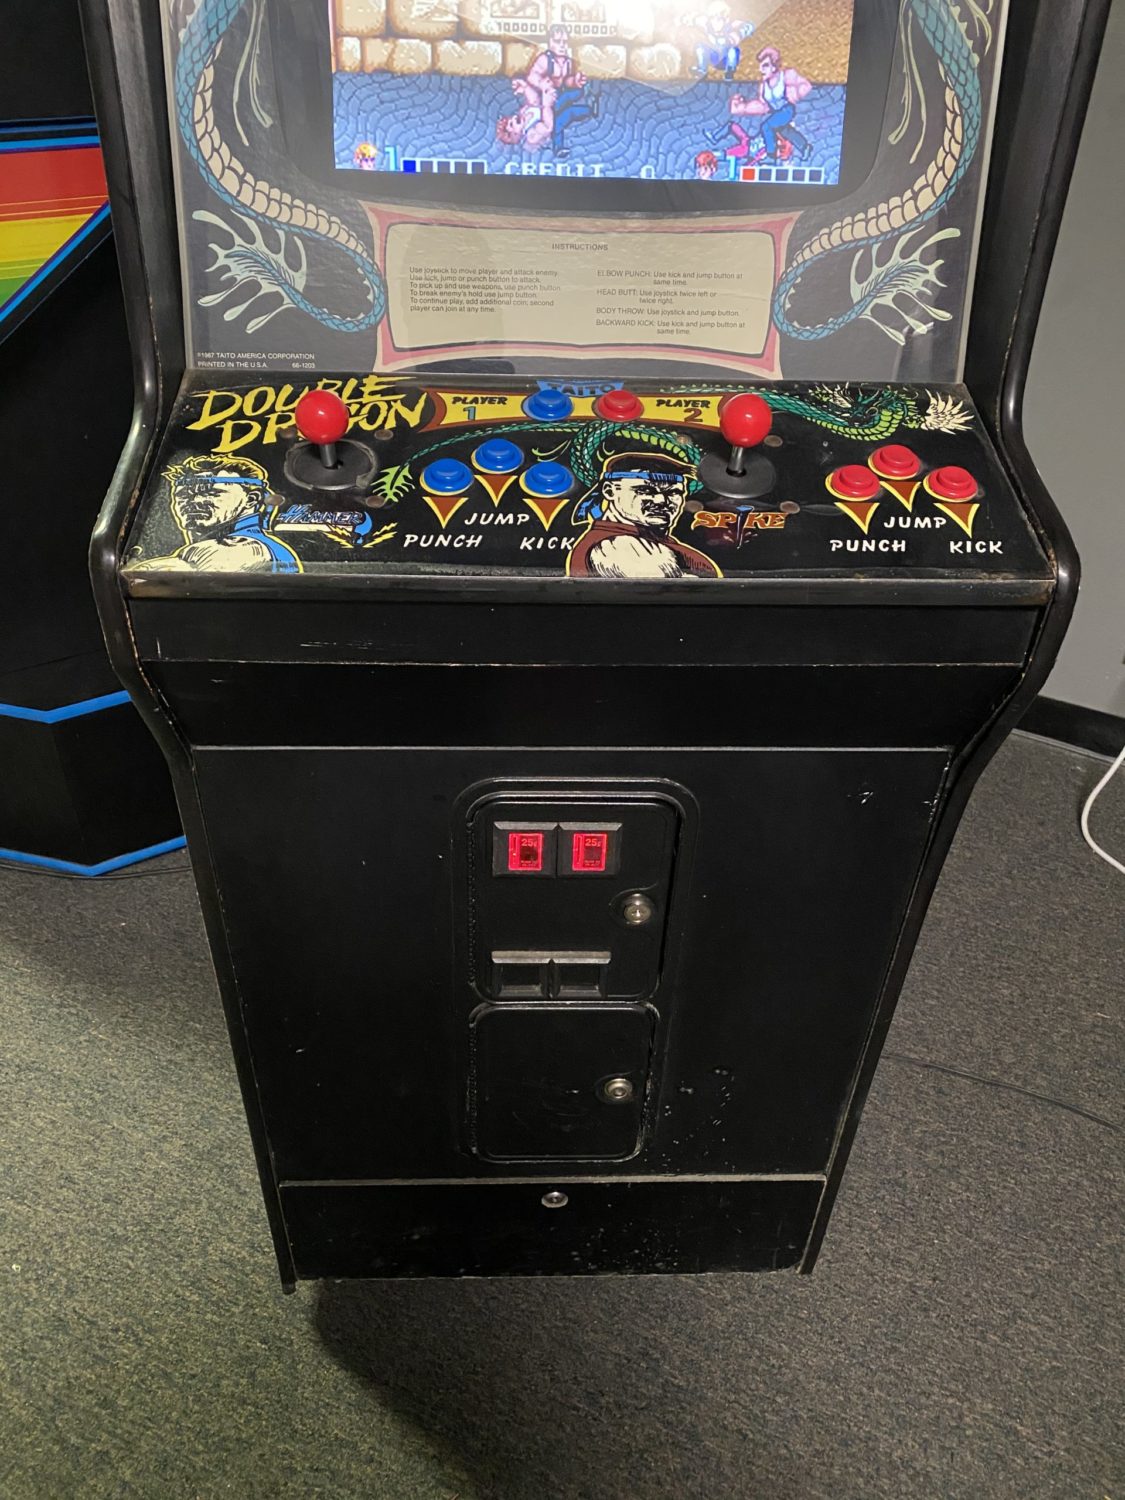 RLM Amusements - Fixed up a Taito Double Dragon Arcade